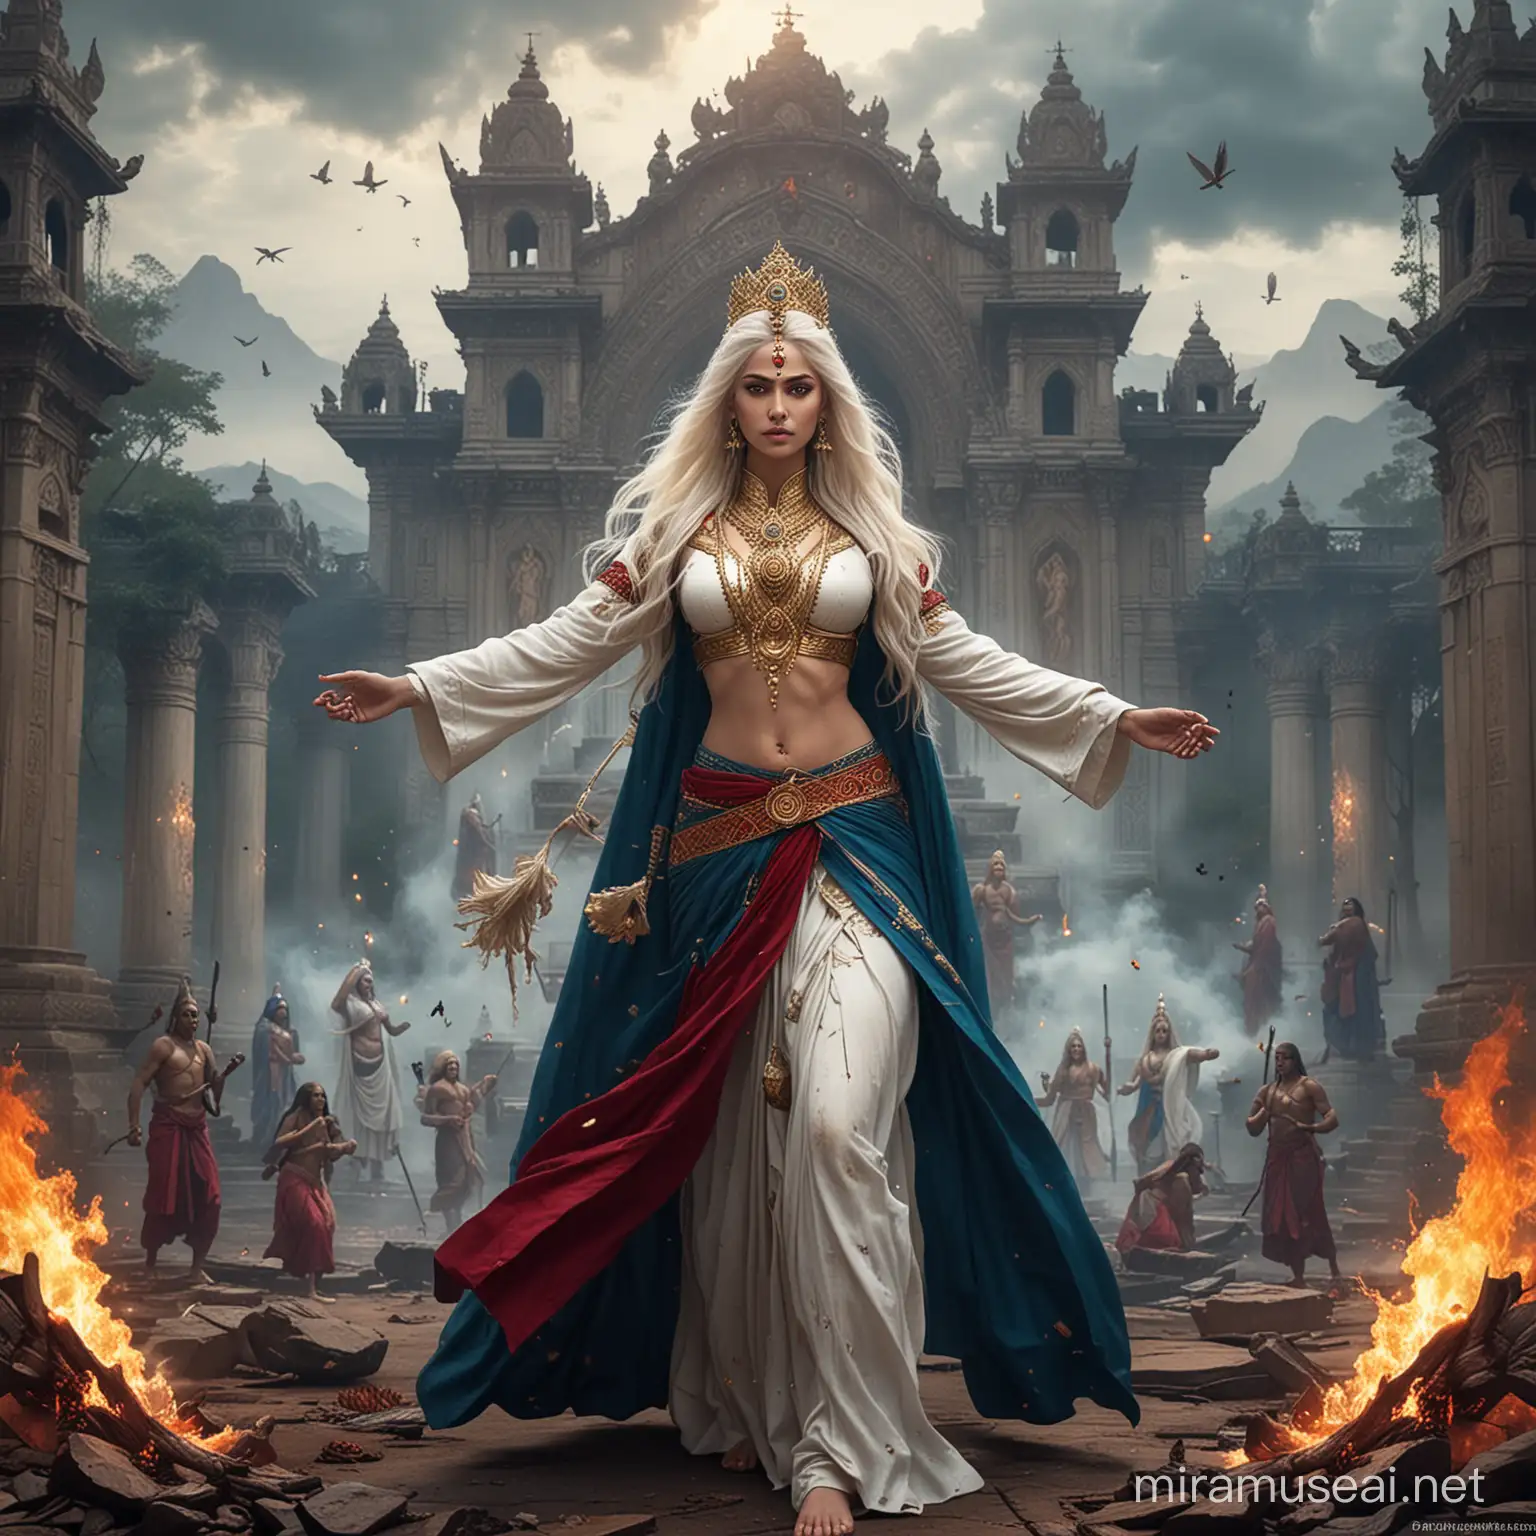 Hindu Empress Goddess Summoning Fire with Demonic Deities in Dark Valley